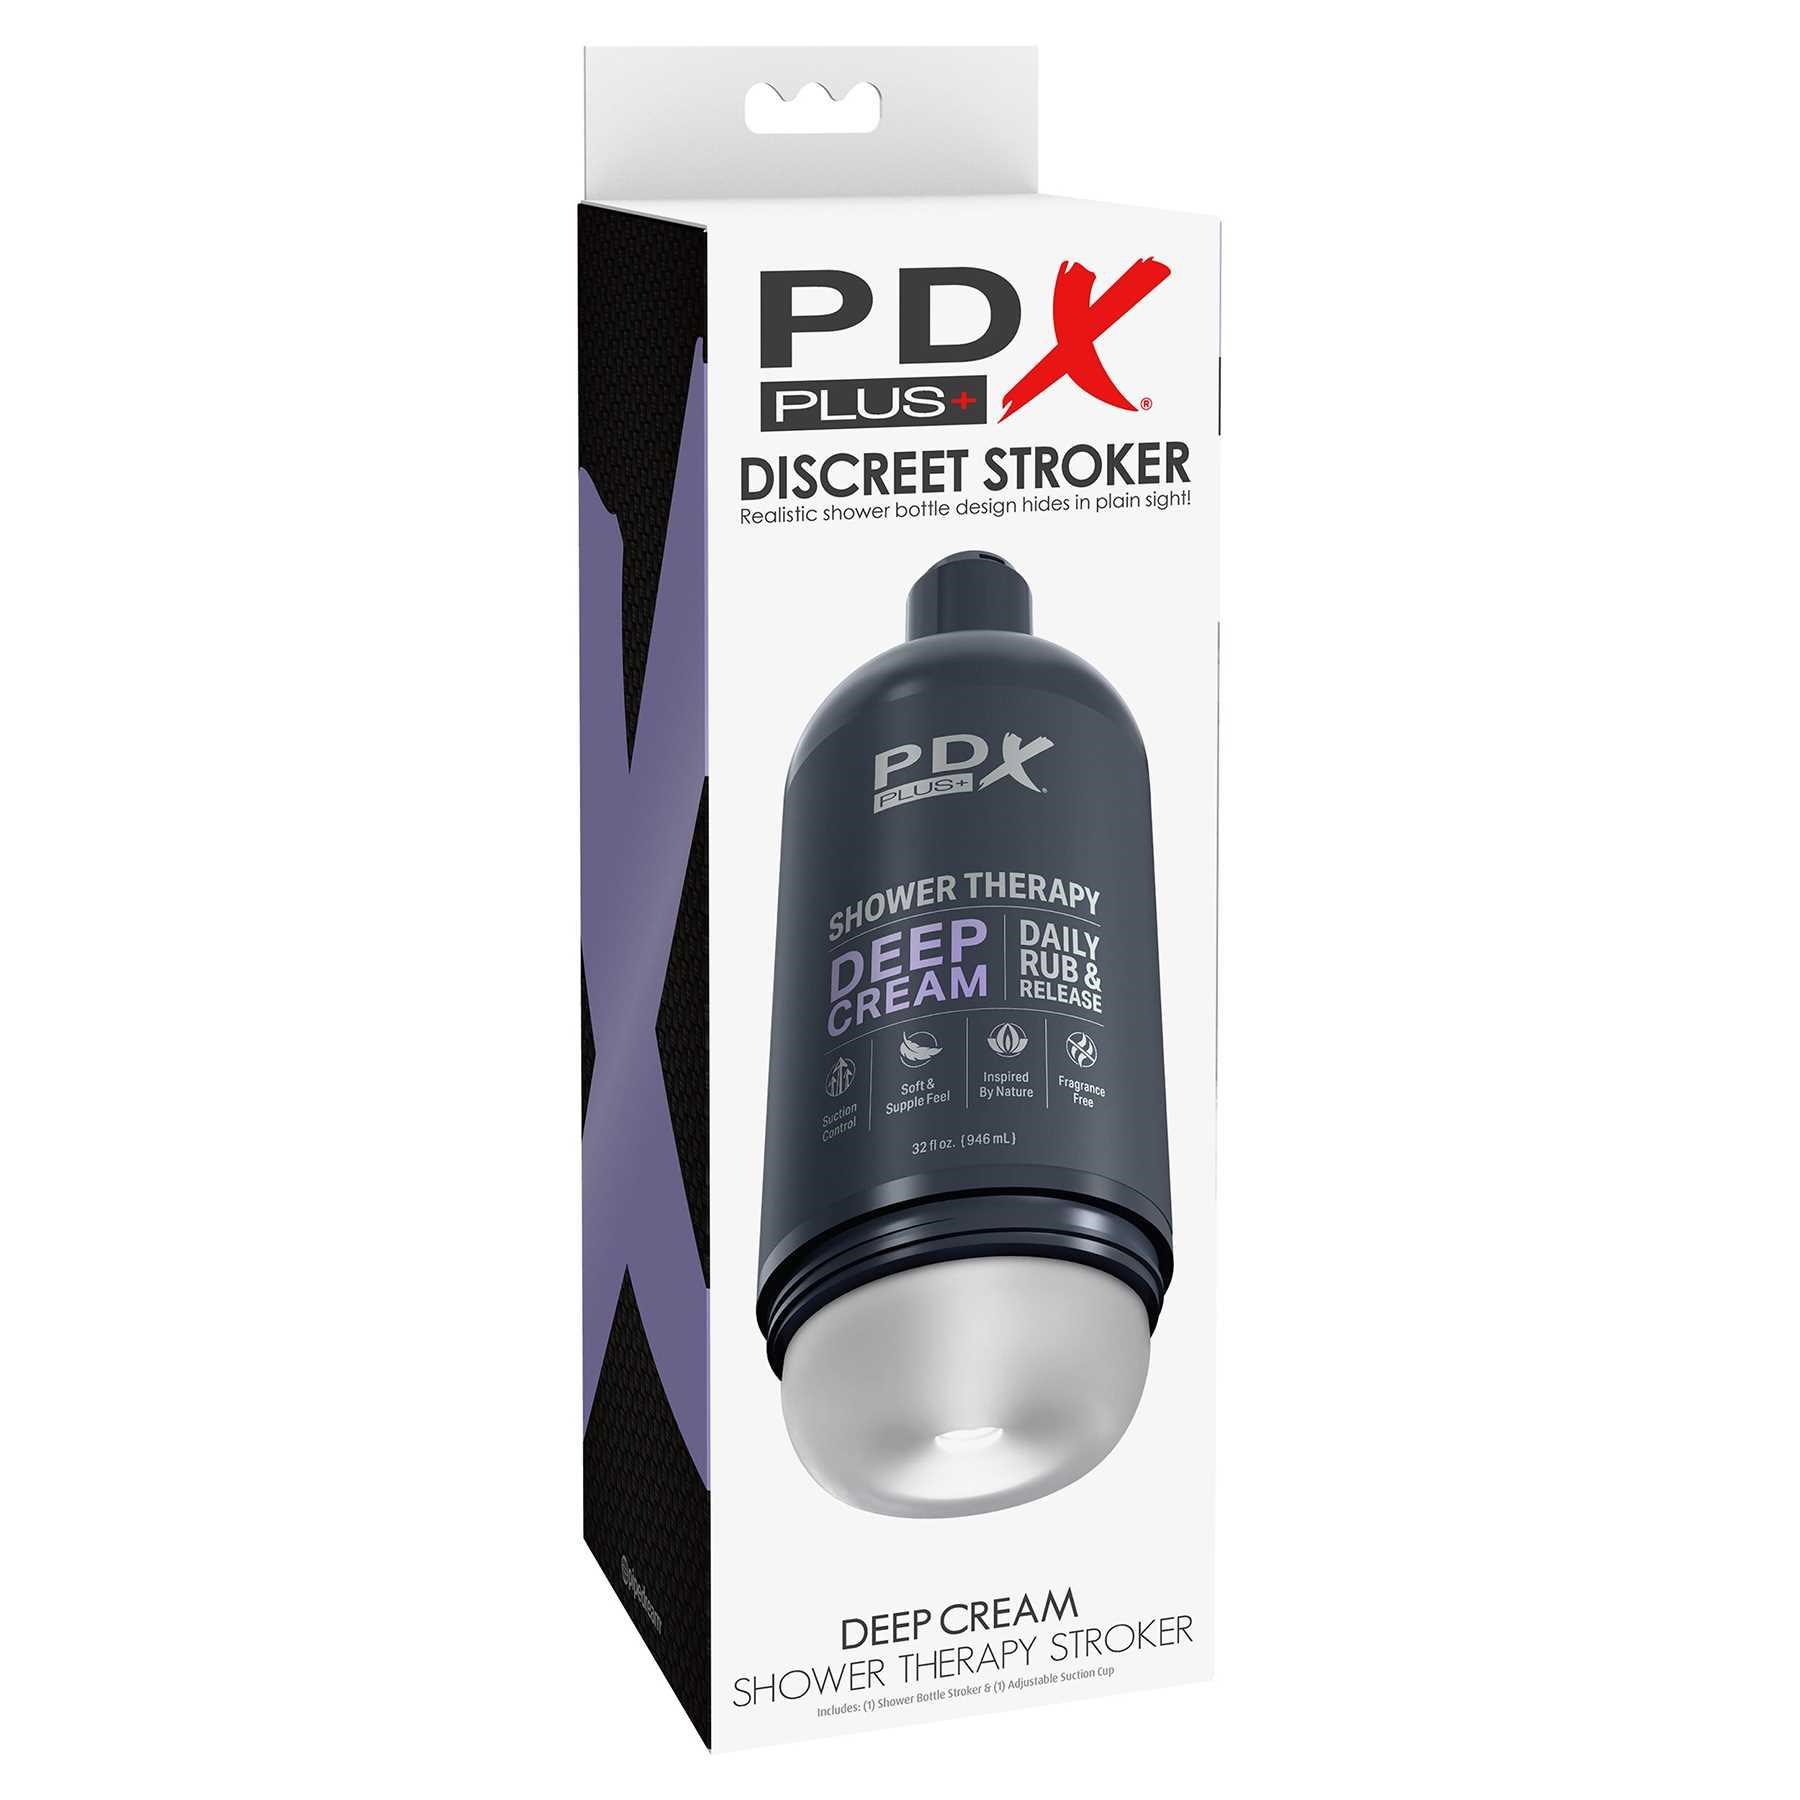 PDX Plus Shower Therapy Deep Cream Discreet Stroker box